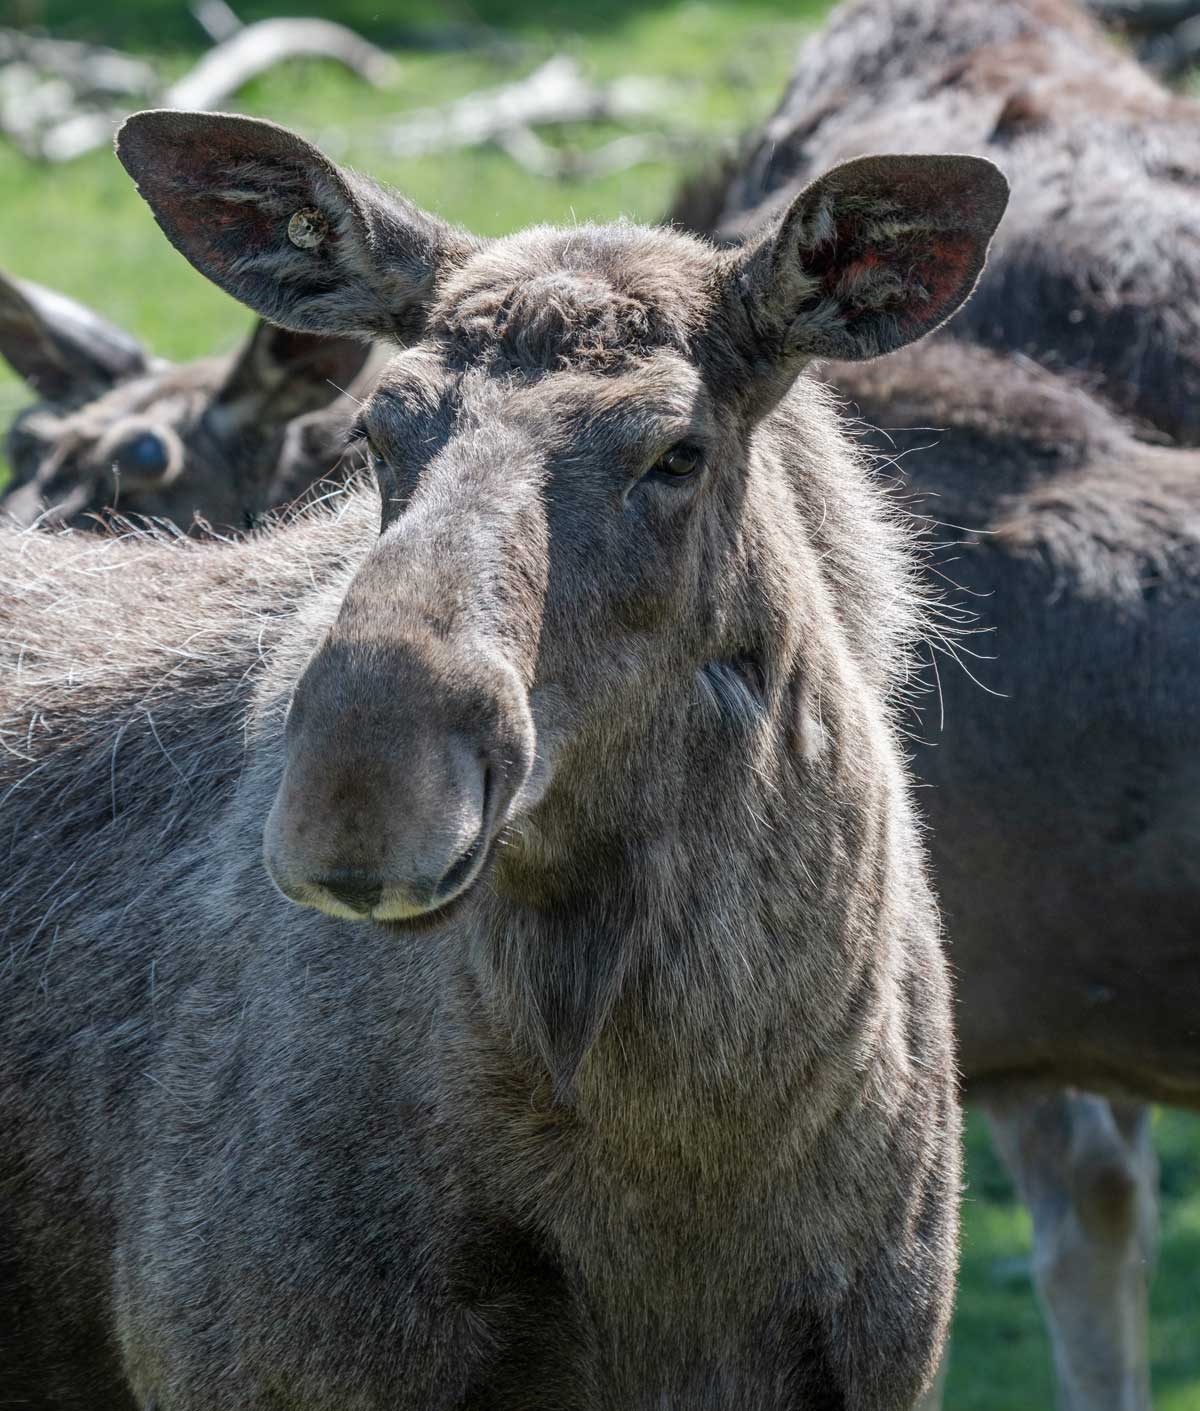 Moose safari in Skullaryd Älgpark